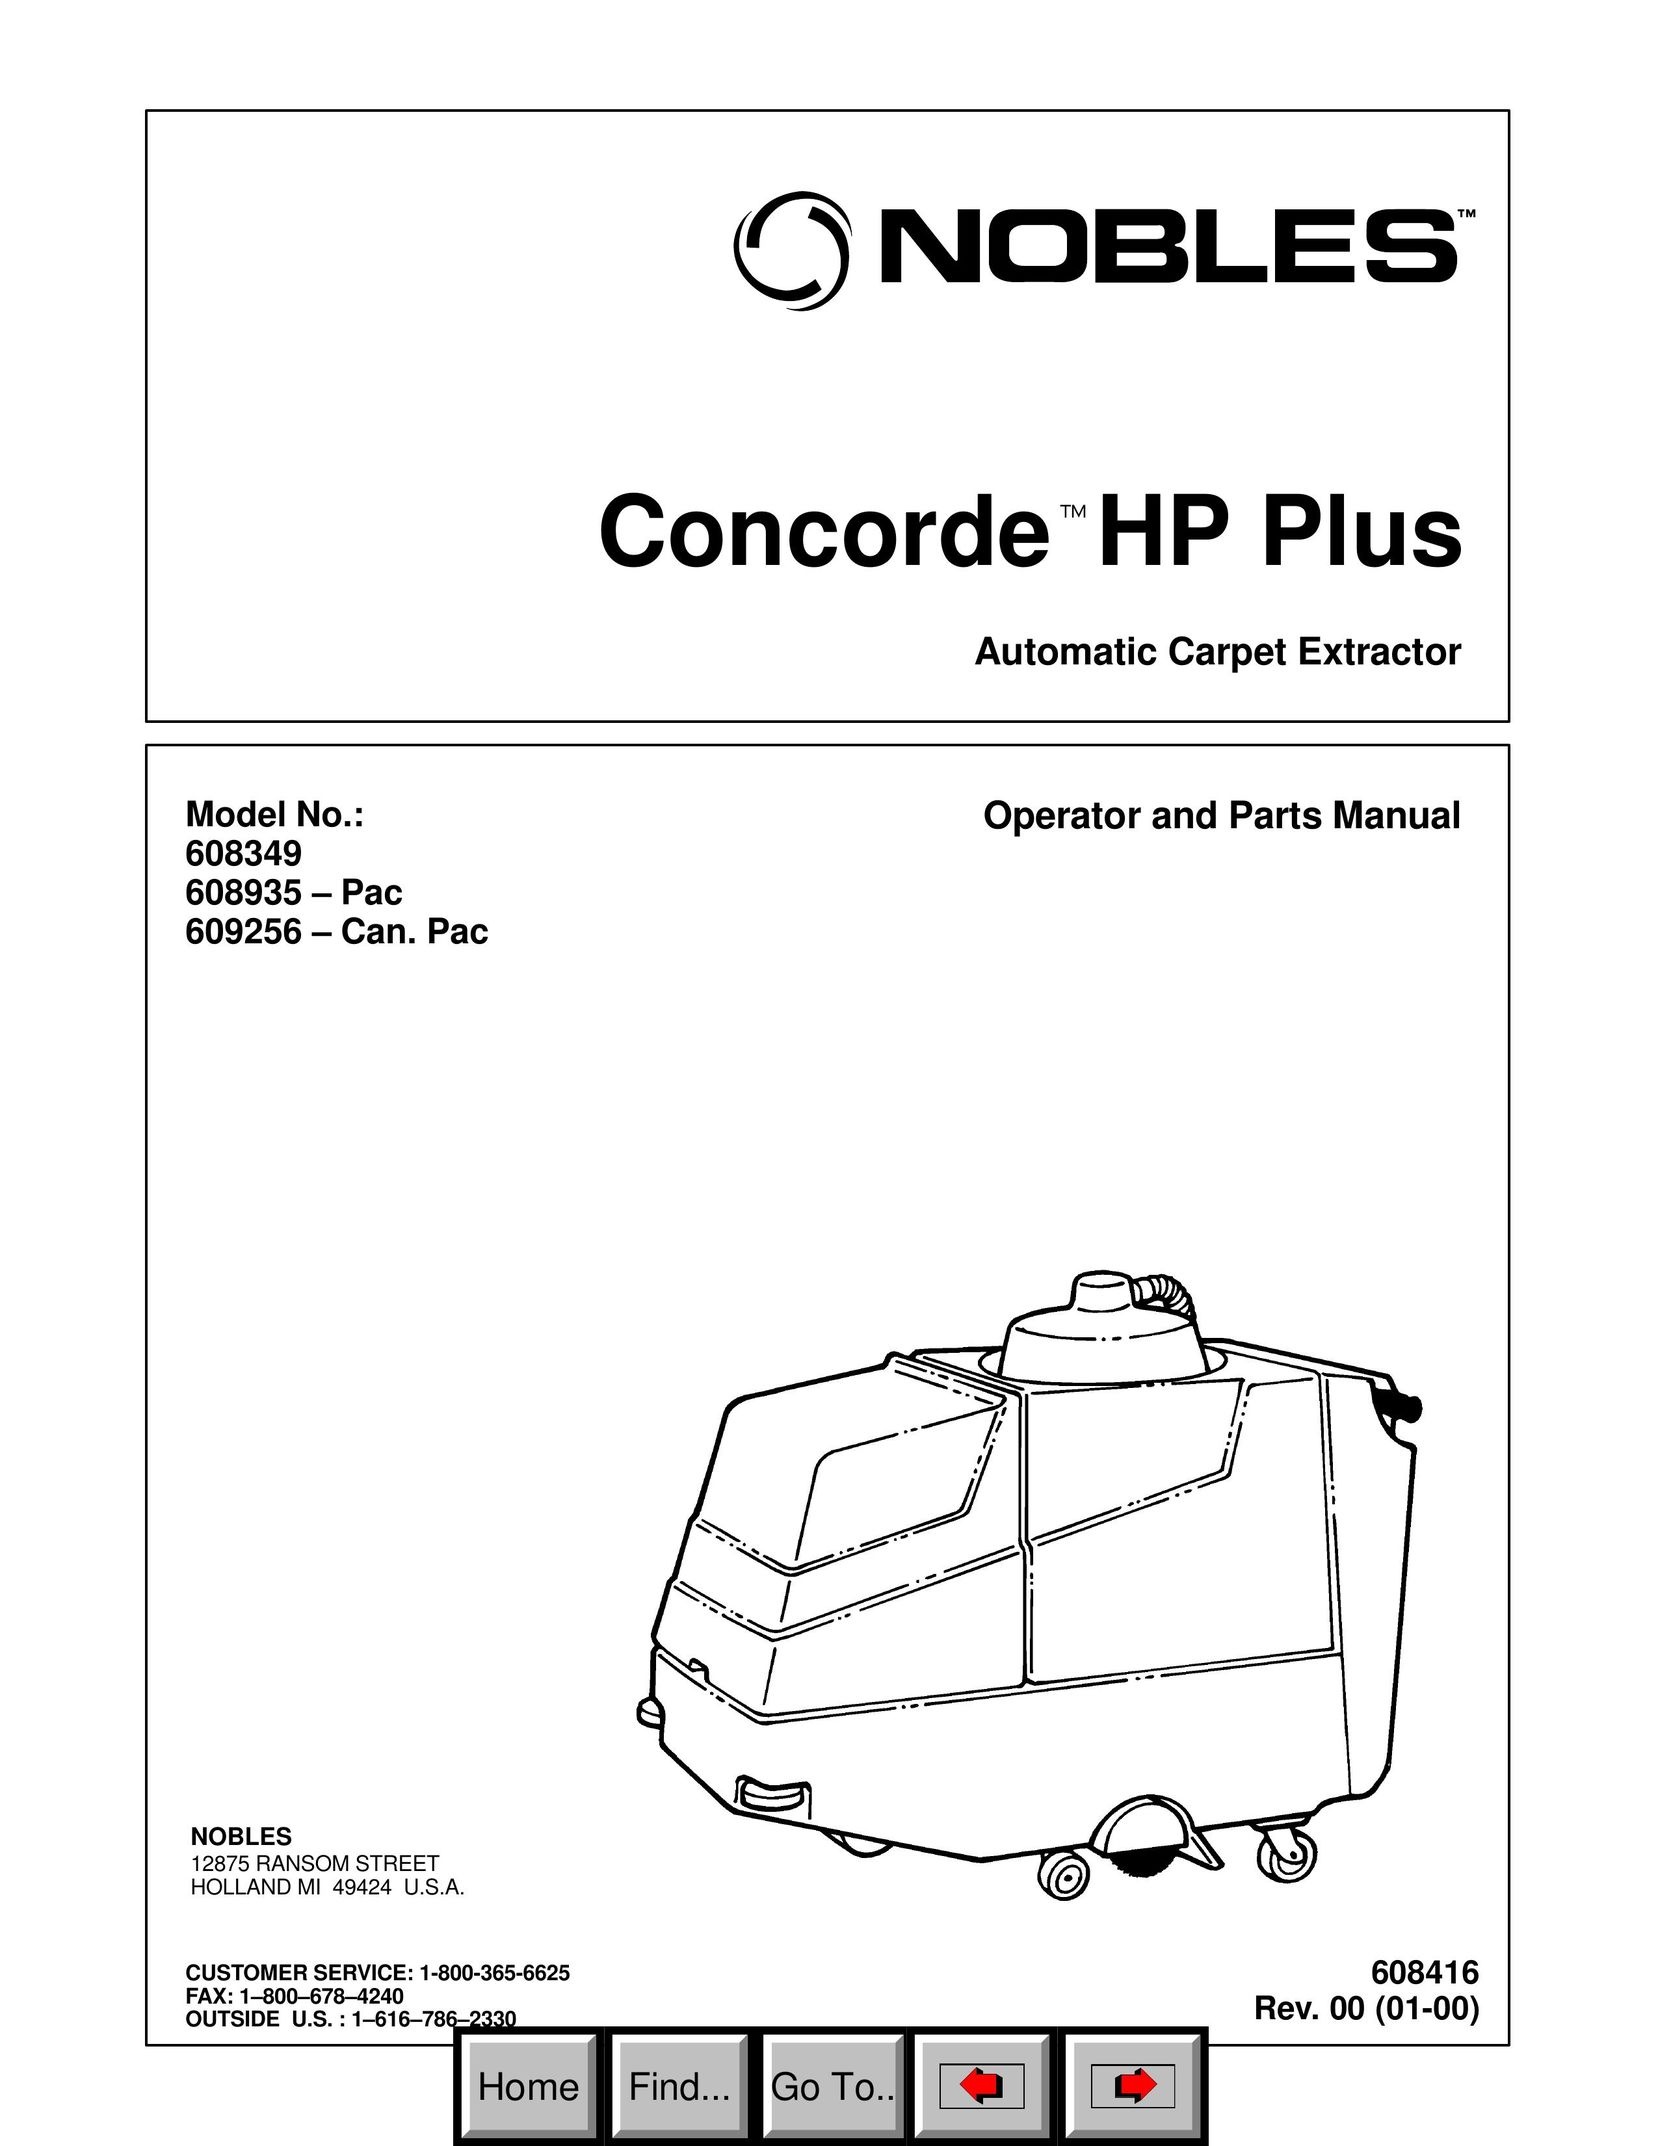 HP (Hewlett-Packard) HP Plus Carpet Cleaner User Manual